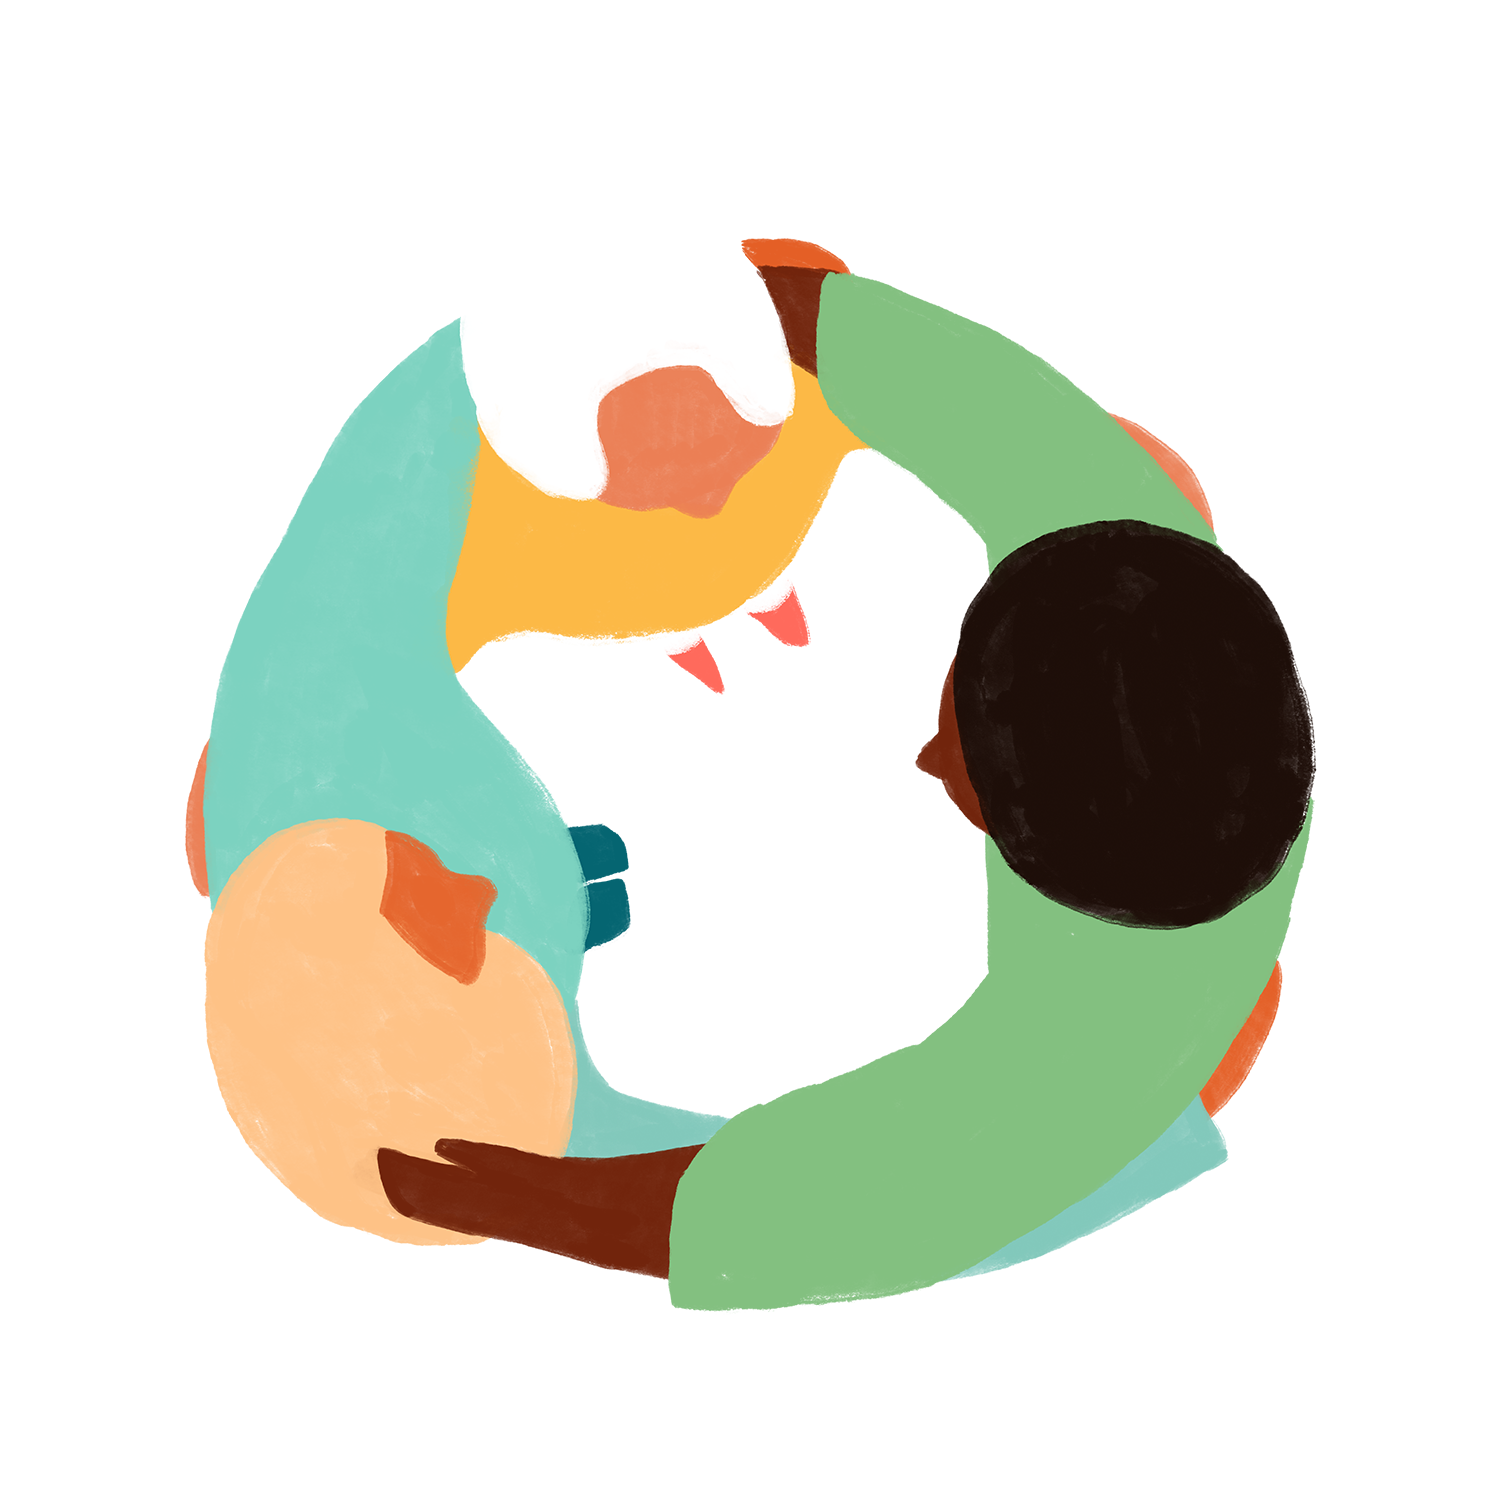 Illustration of 3 people hugging